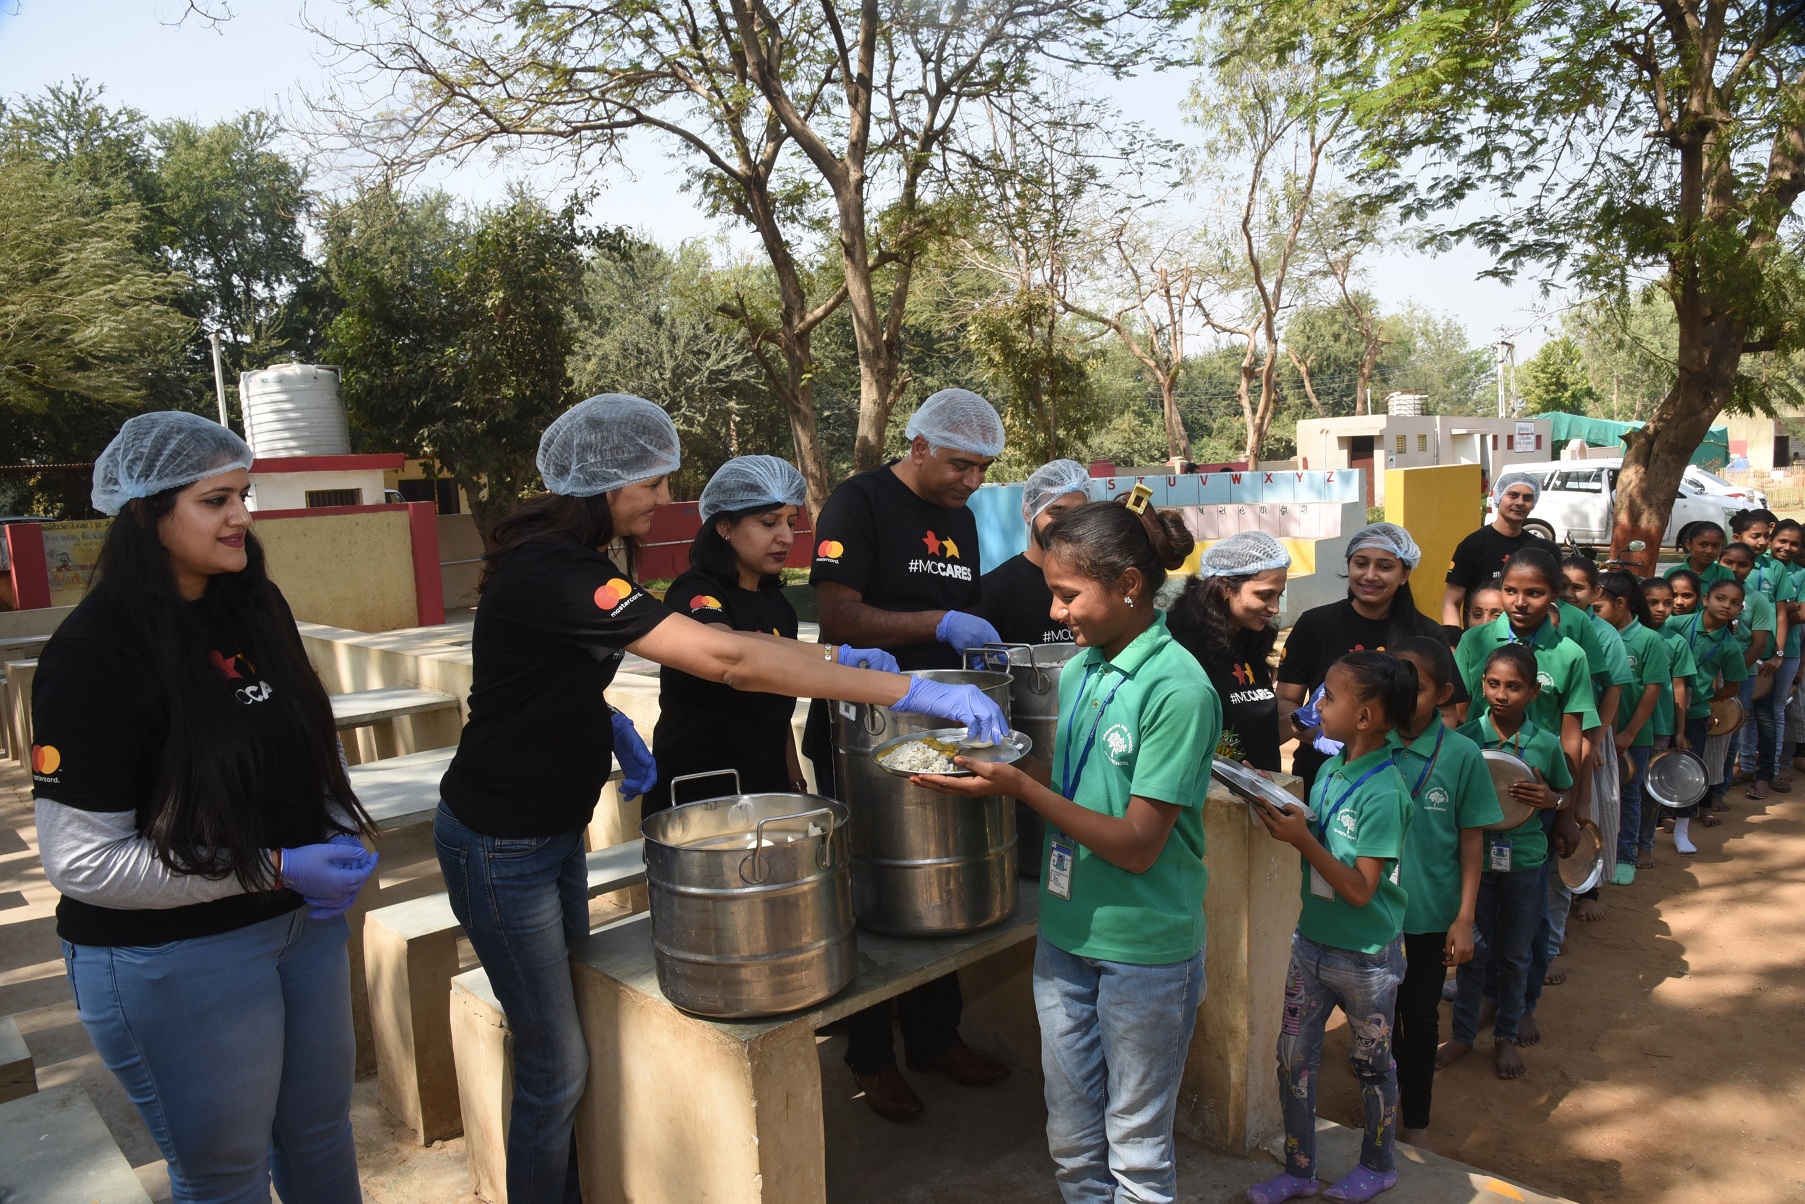 Deepak Mahbubani along with other Mastercard team members distributing mid-day meals at the Dhorivaga school in Vadodara